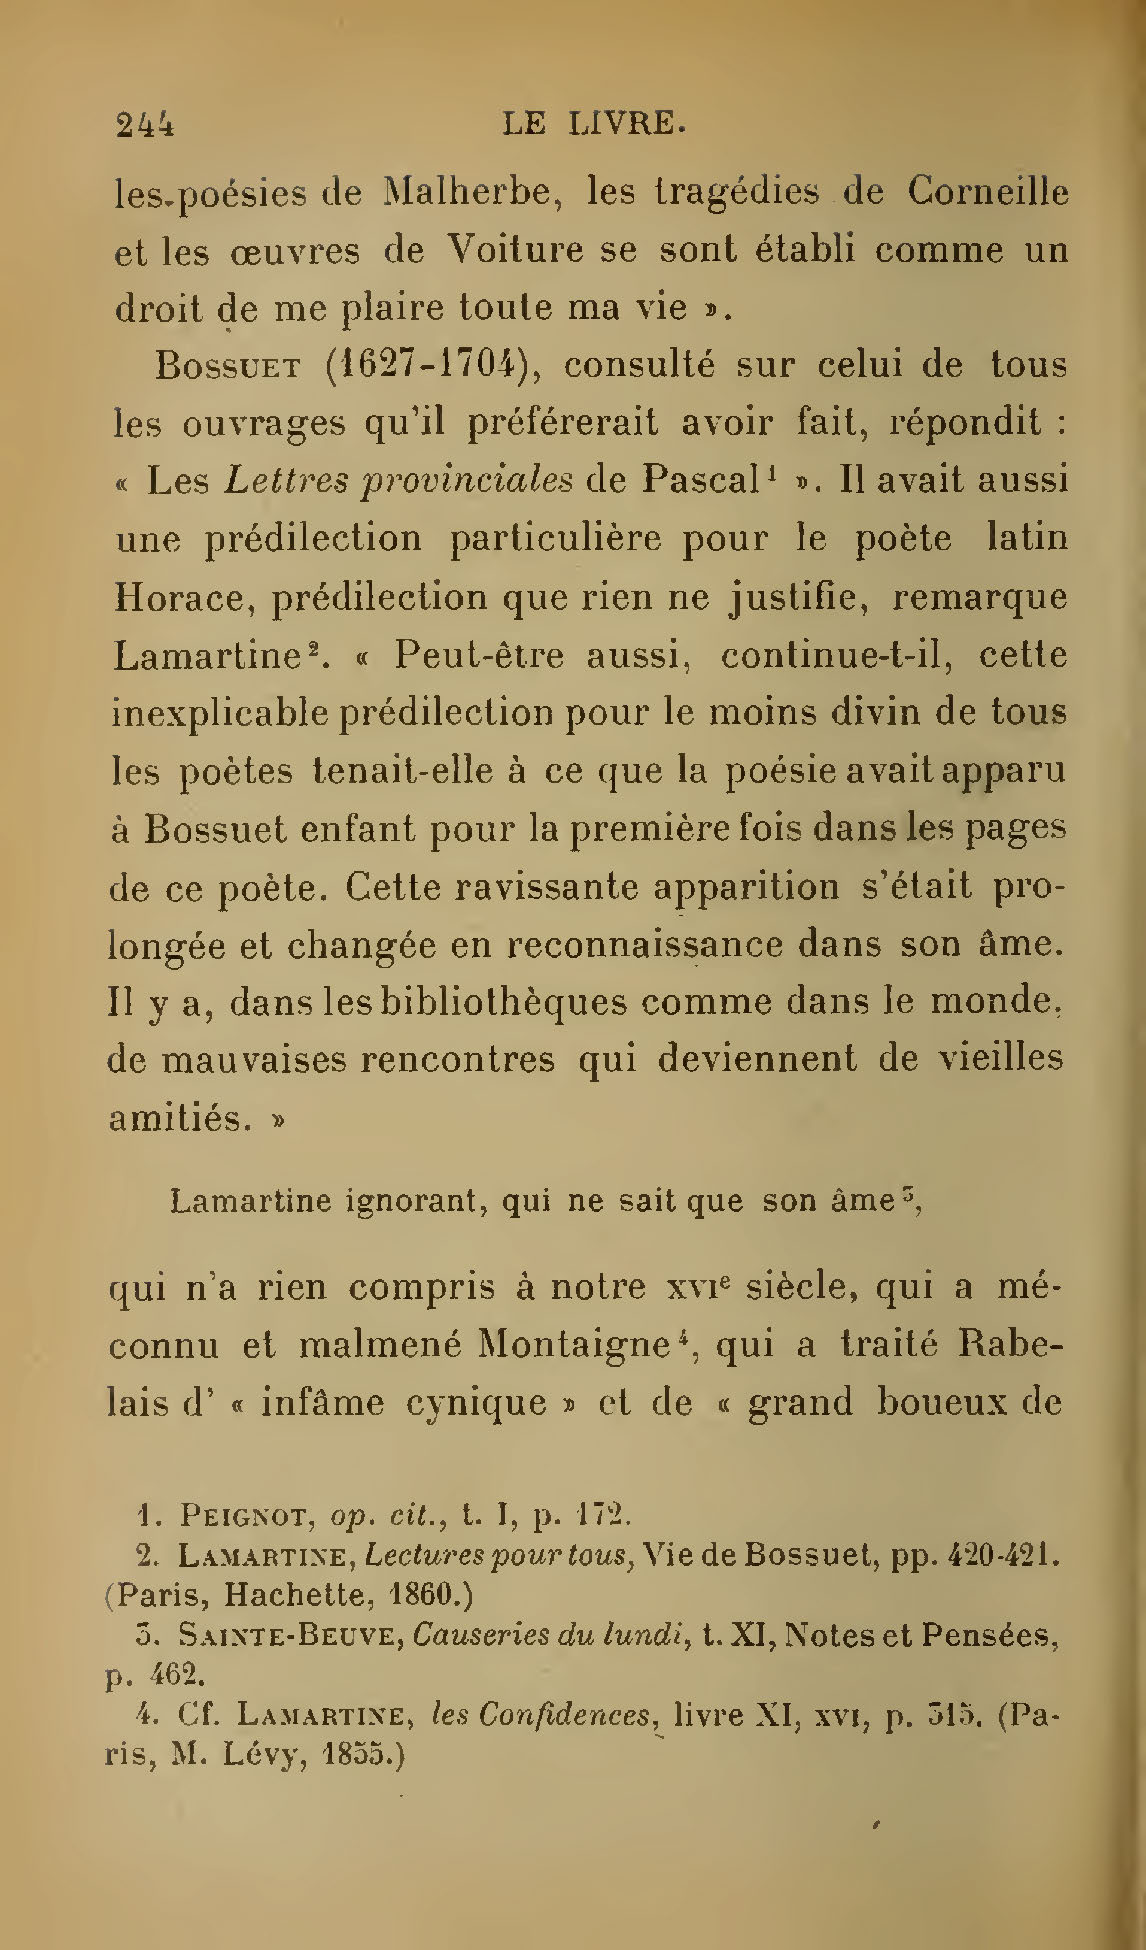 Albert Cim, Le Livre, t. I, p. 244.